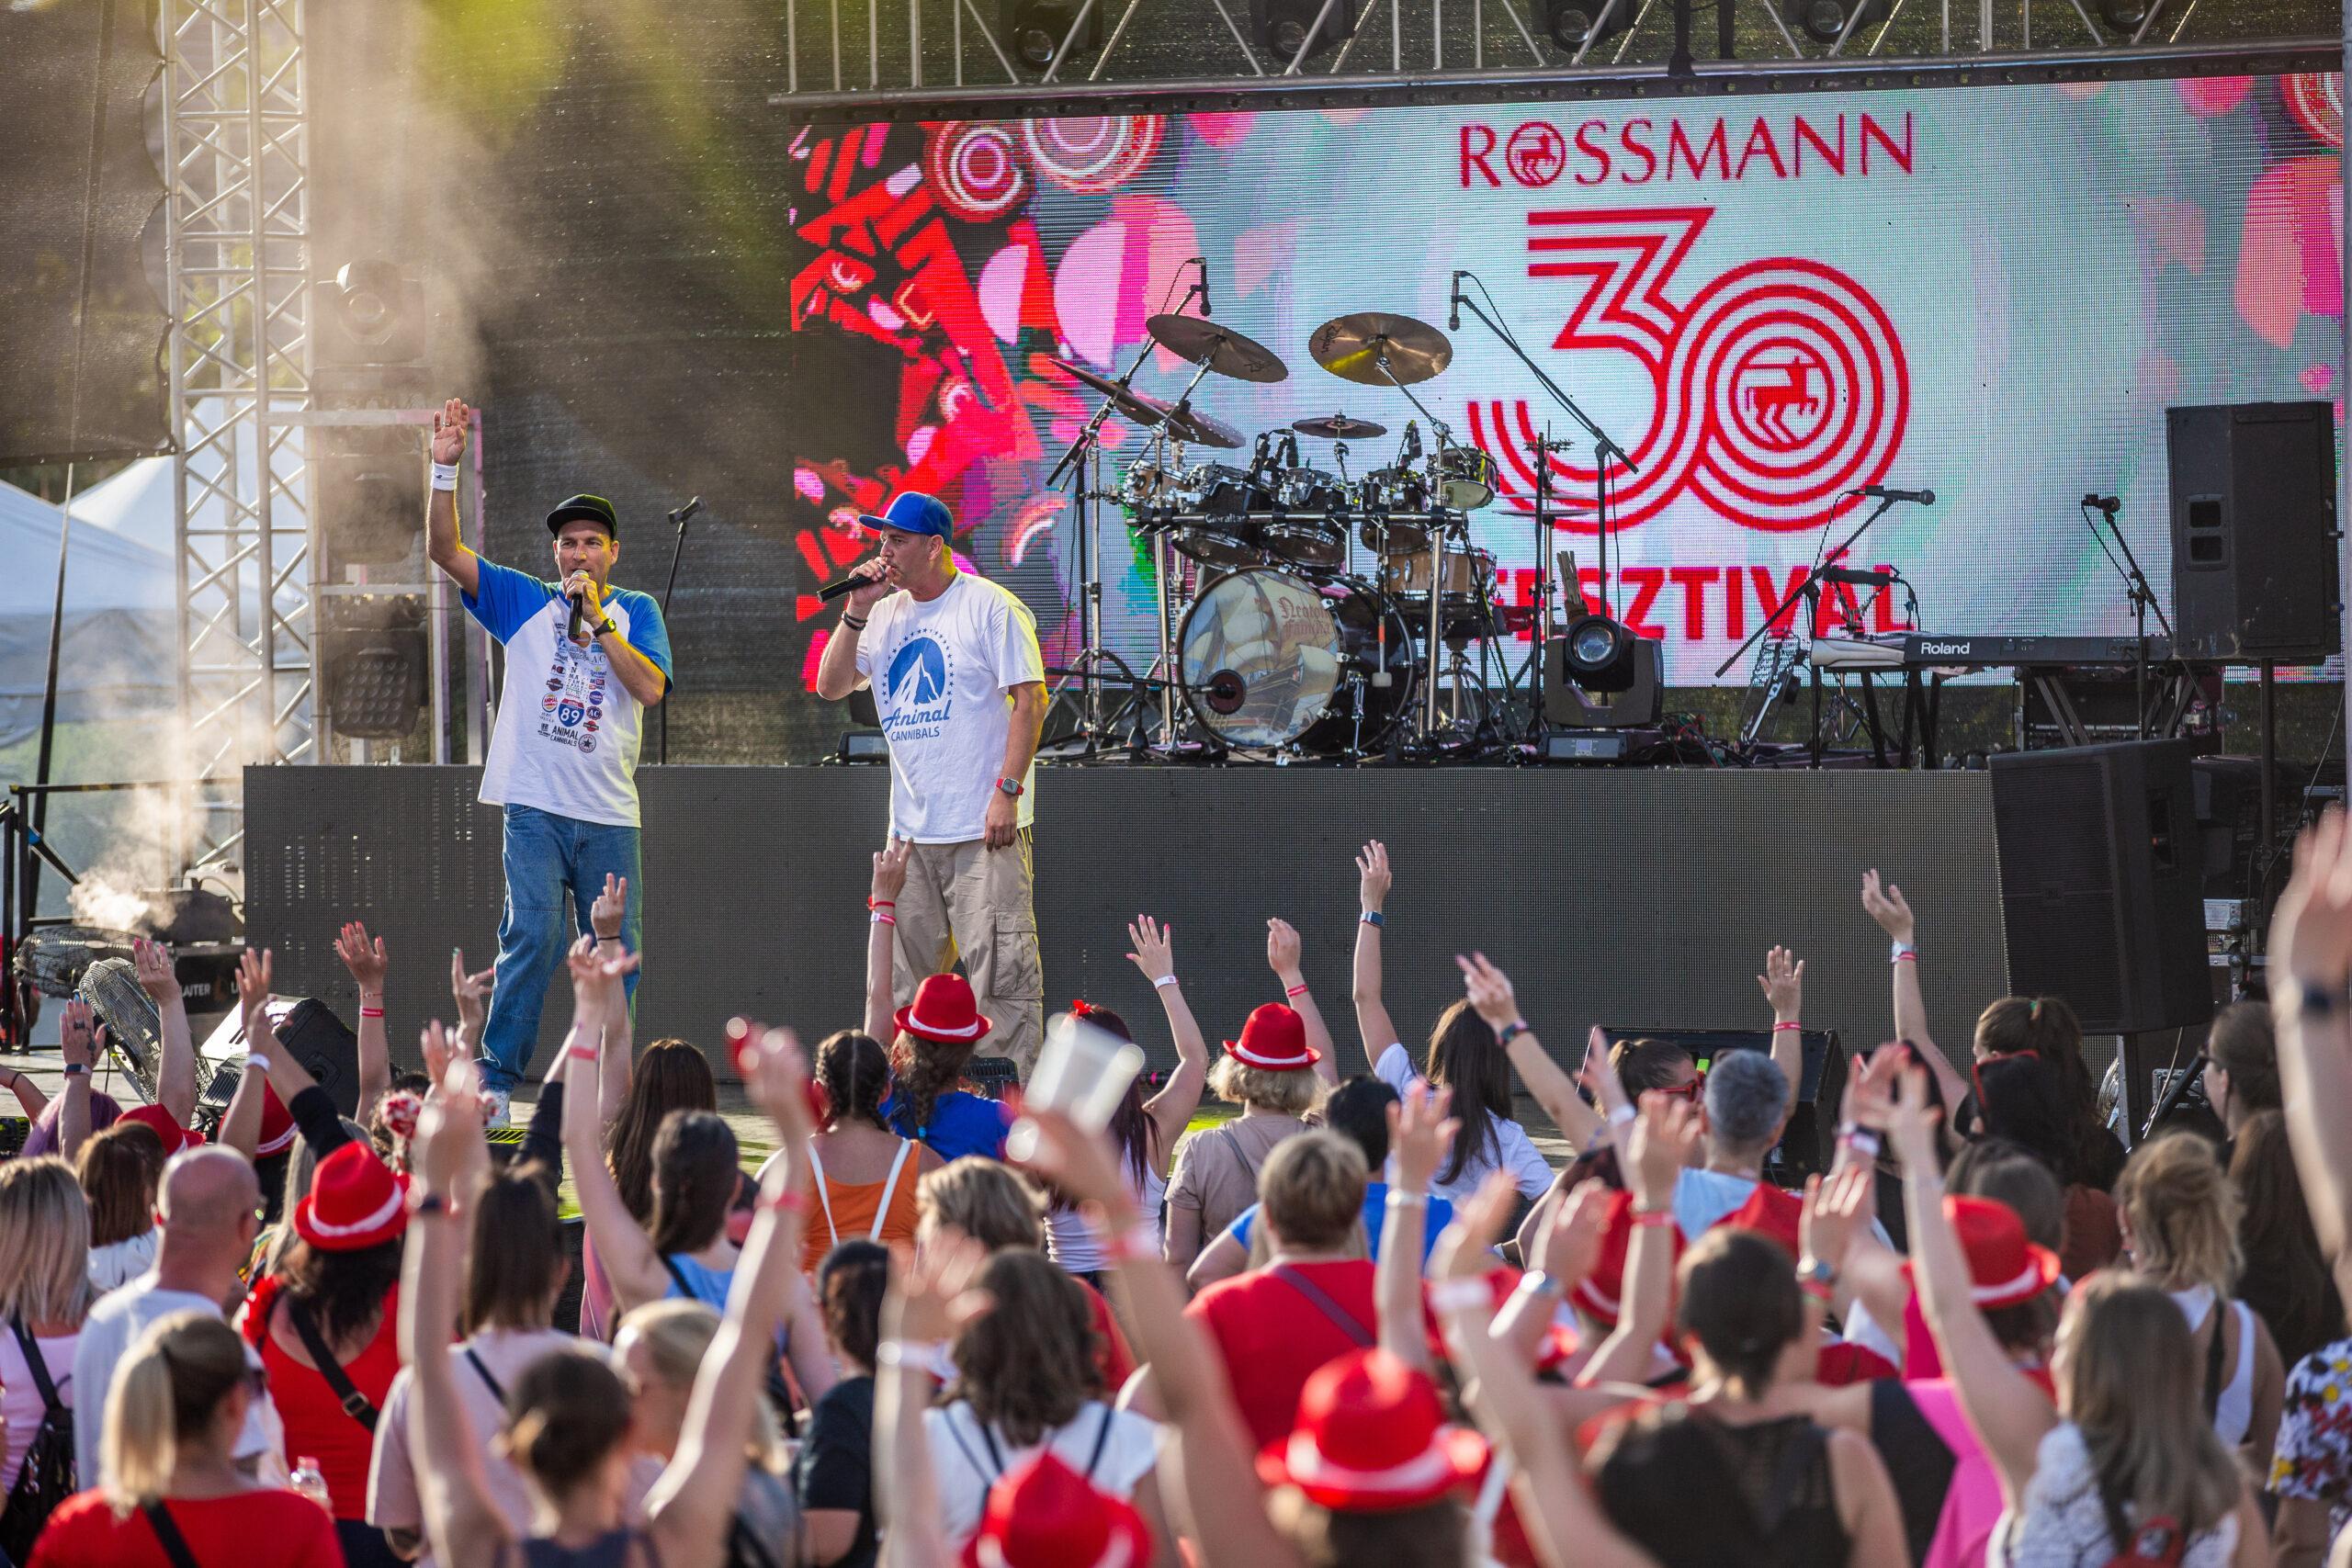 Rossmann Poland Celebrates 30 Years of Success